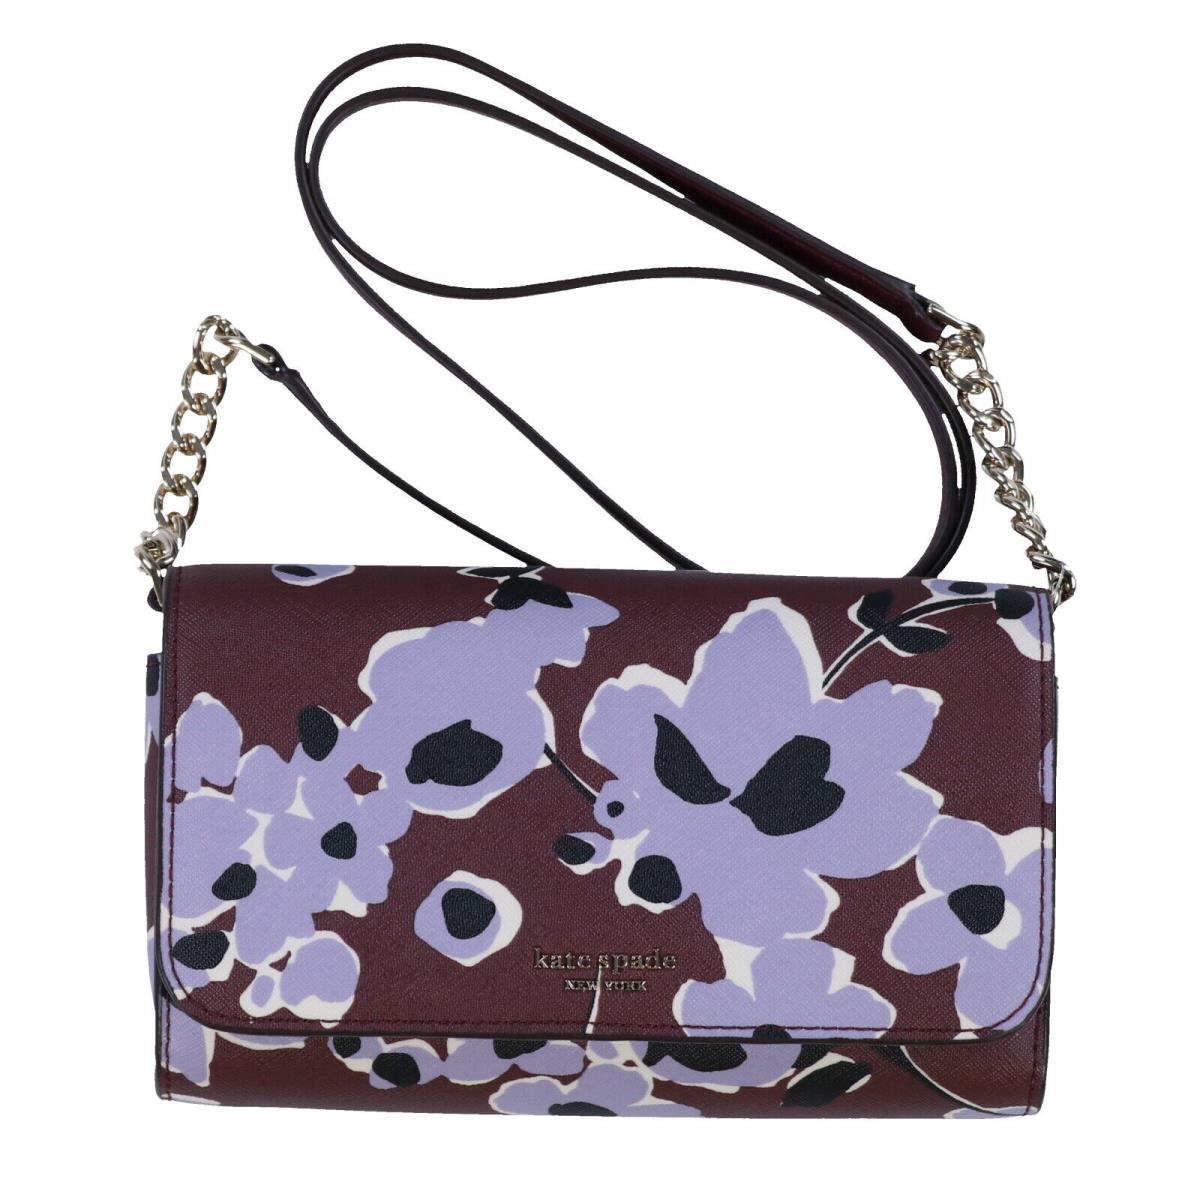 Kate Spade New York Cameron Crossbody Purse Bag Small Flap Leather Handbag New Brown Purple Flowers